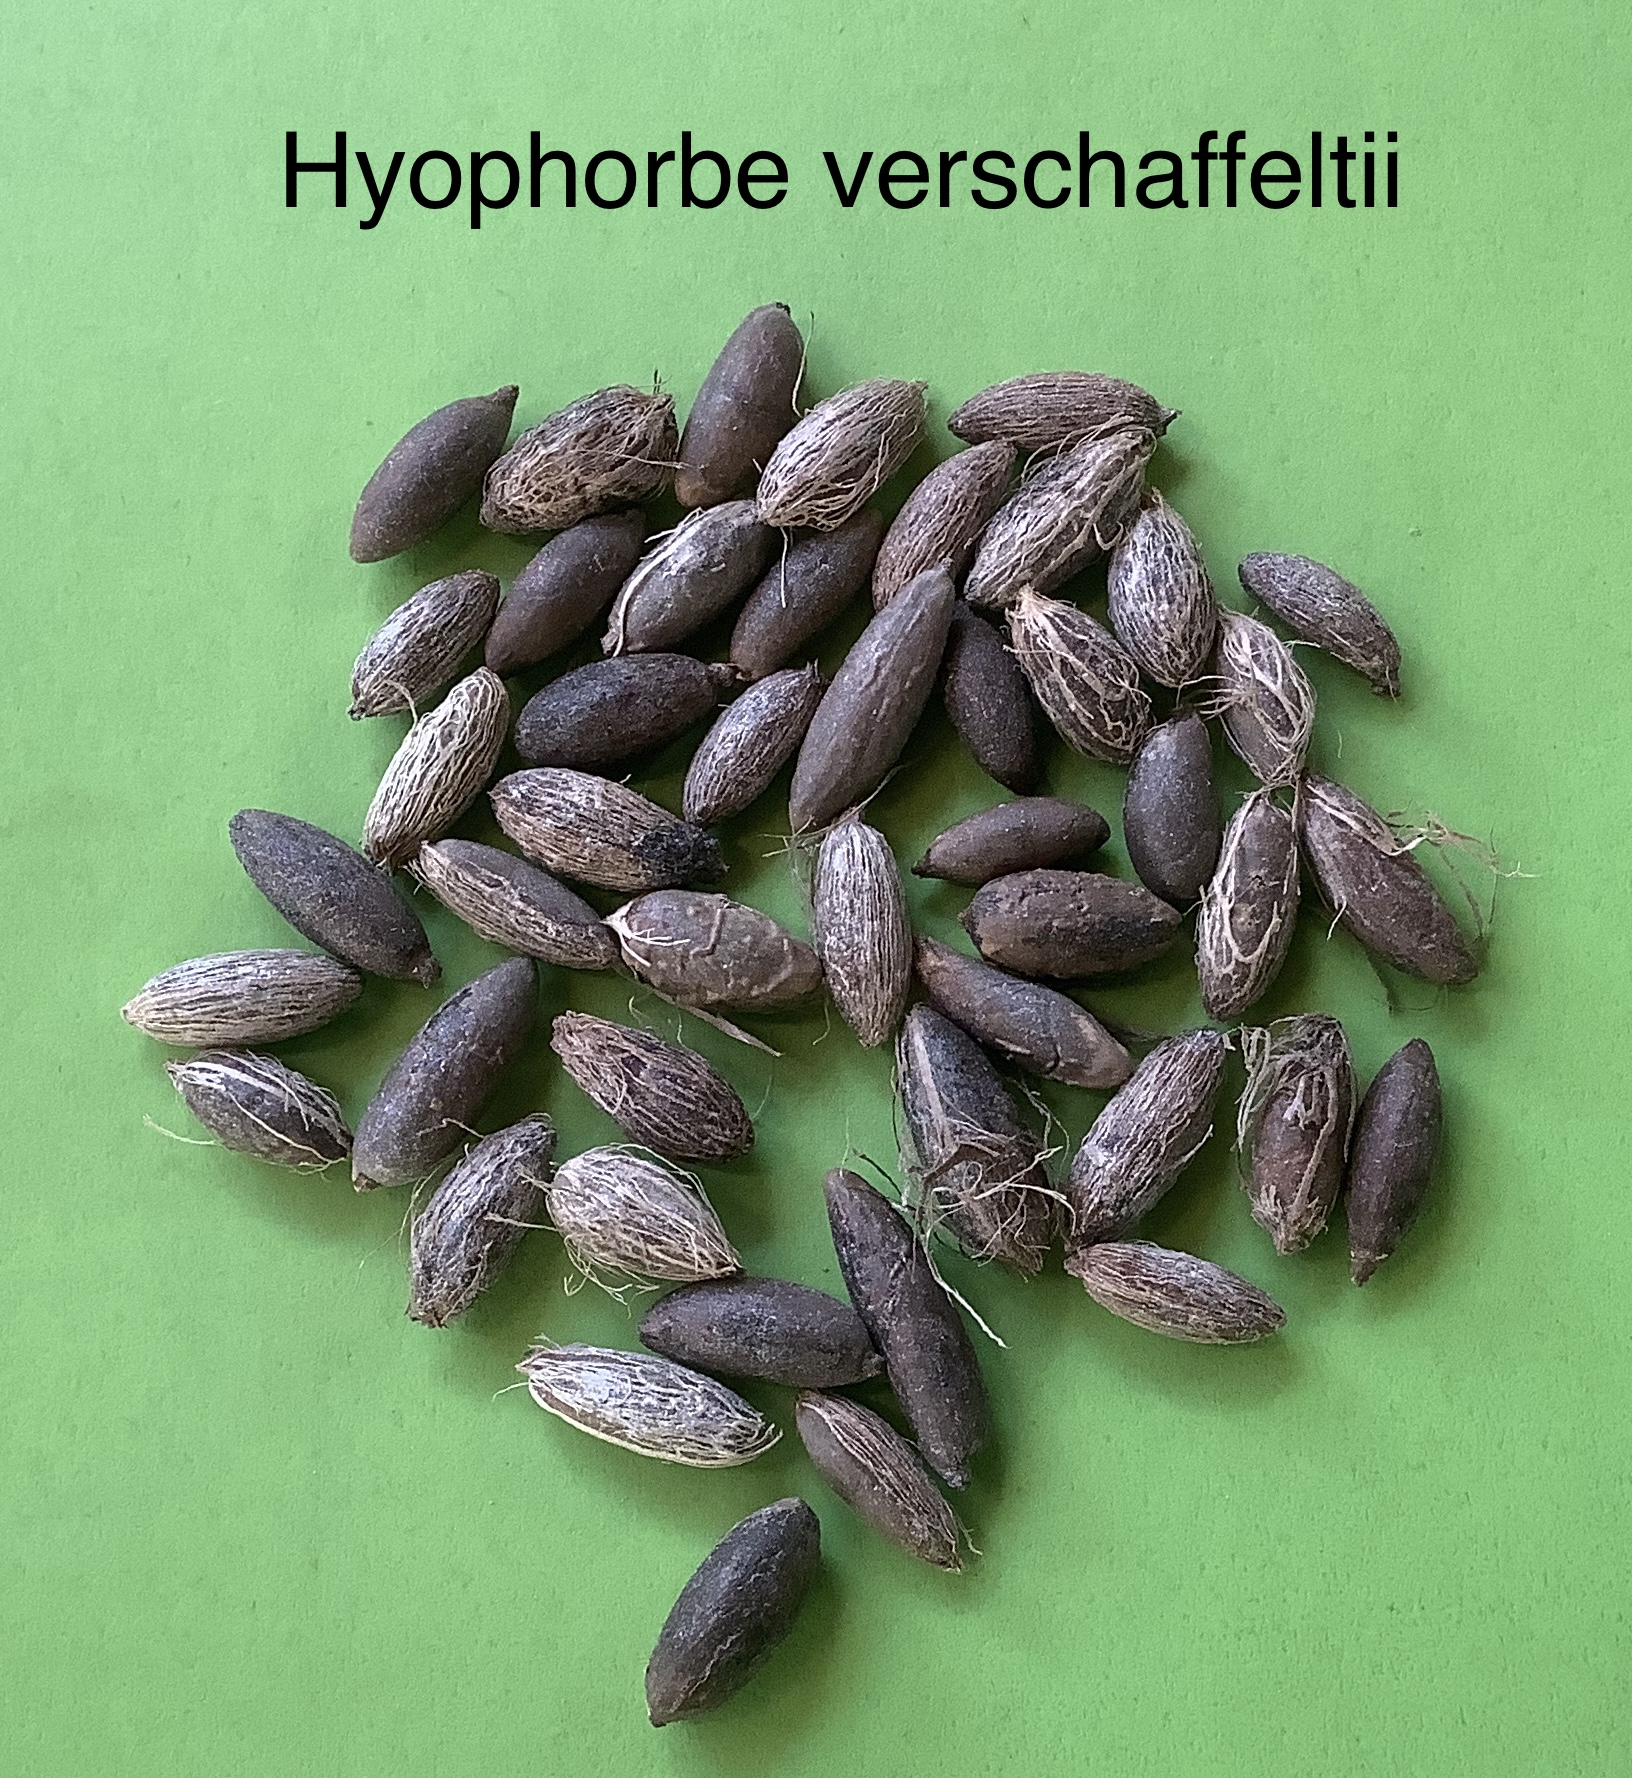 38 Hyophorbe verschaffeltii